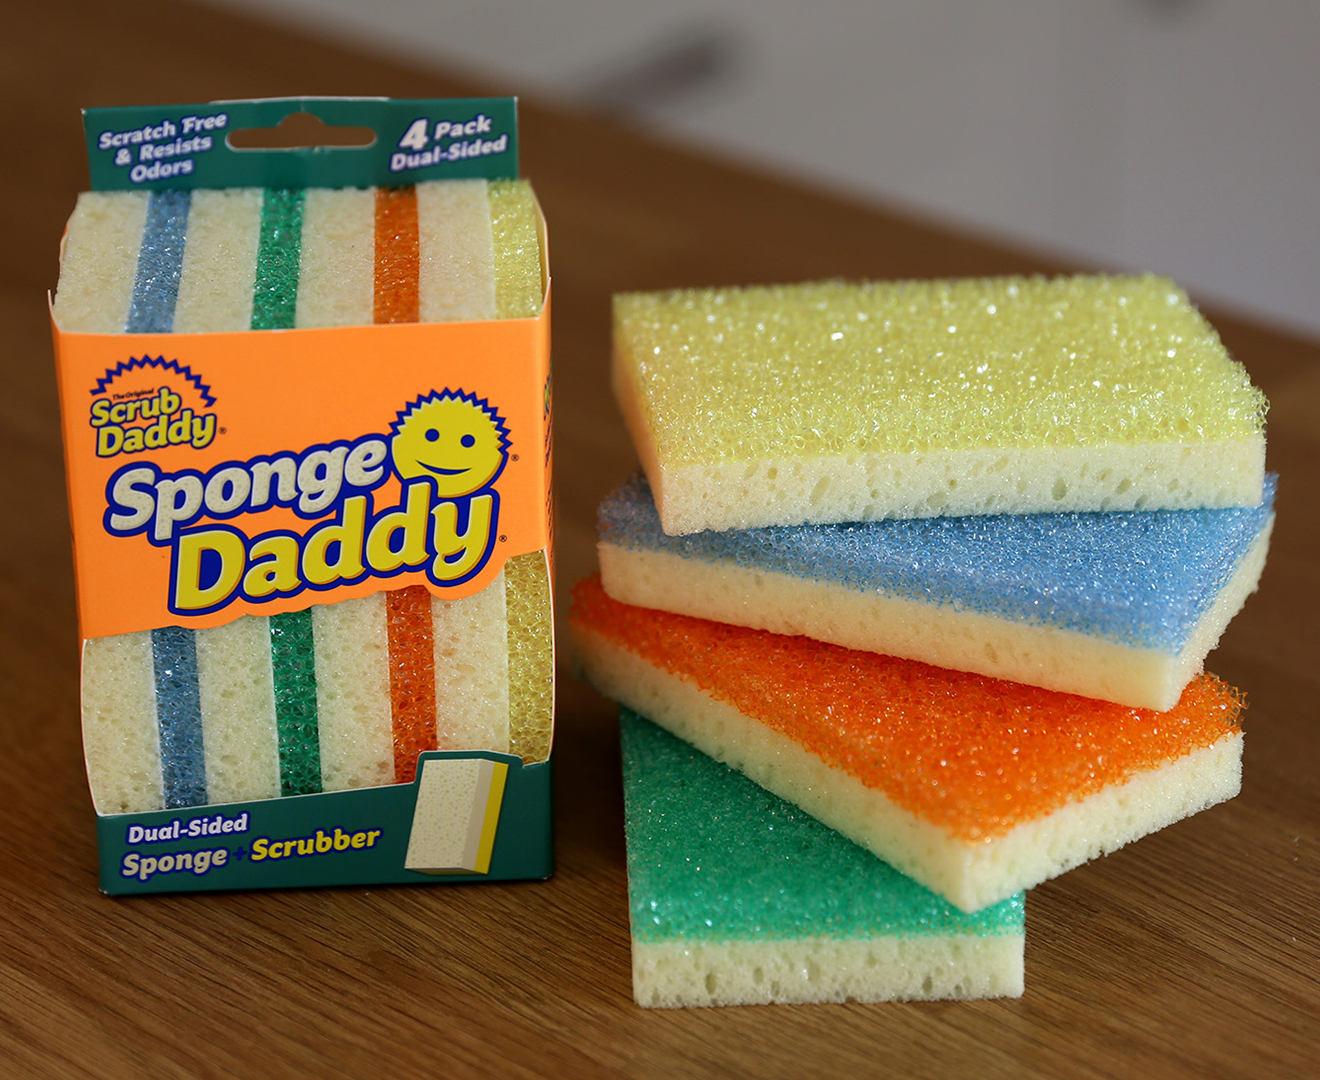 Scrub Daddy Sponge Daddy Sponge + Scrubber, Dual-Sided, 3 Pack - 3 sponge